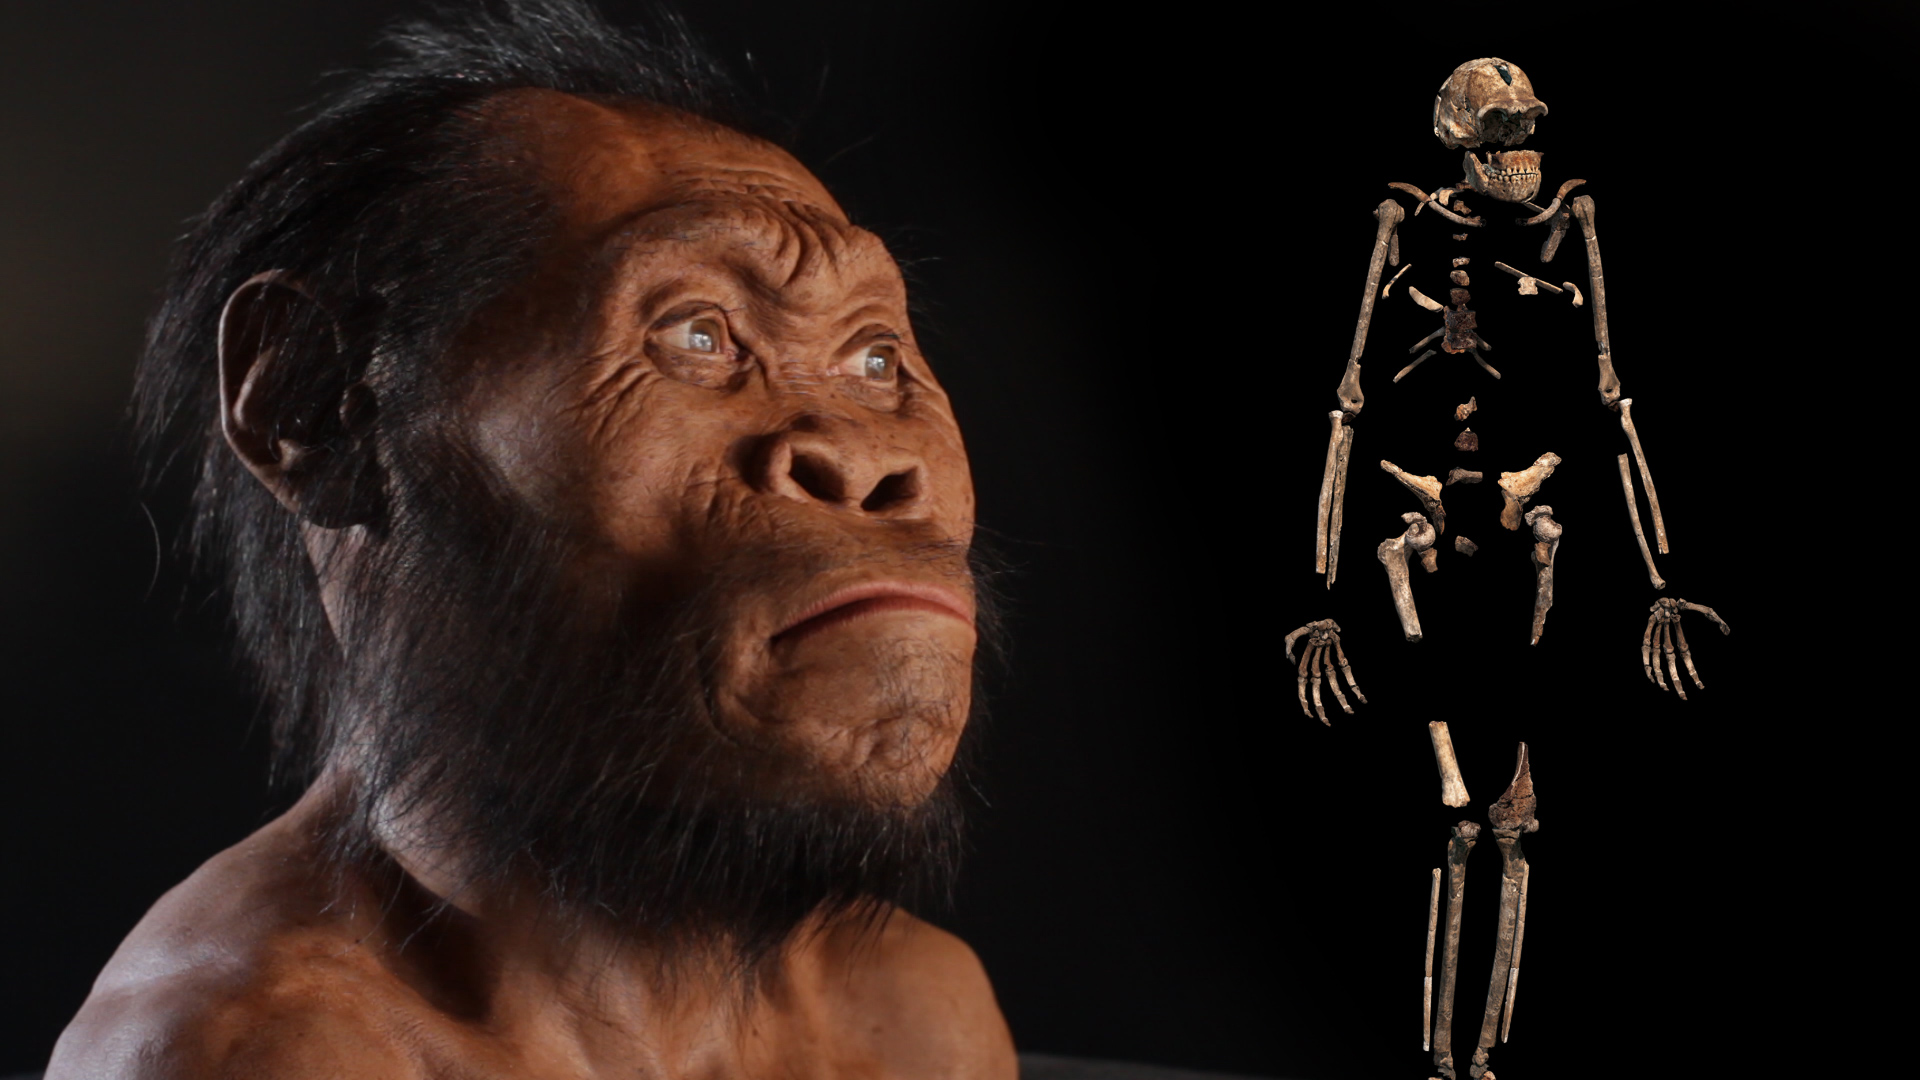 0000014f-b66e-deef-a9ef-b66e2cbe0000-new-human-ancestor-discovered-homo-naledi-exclusive-video